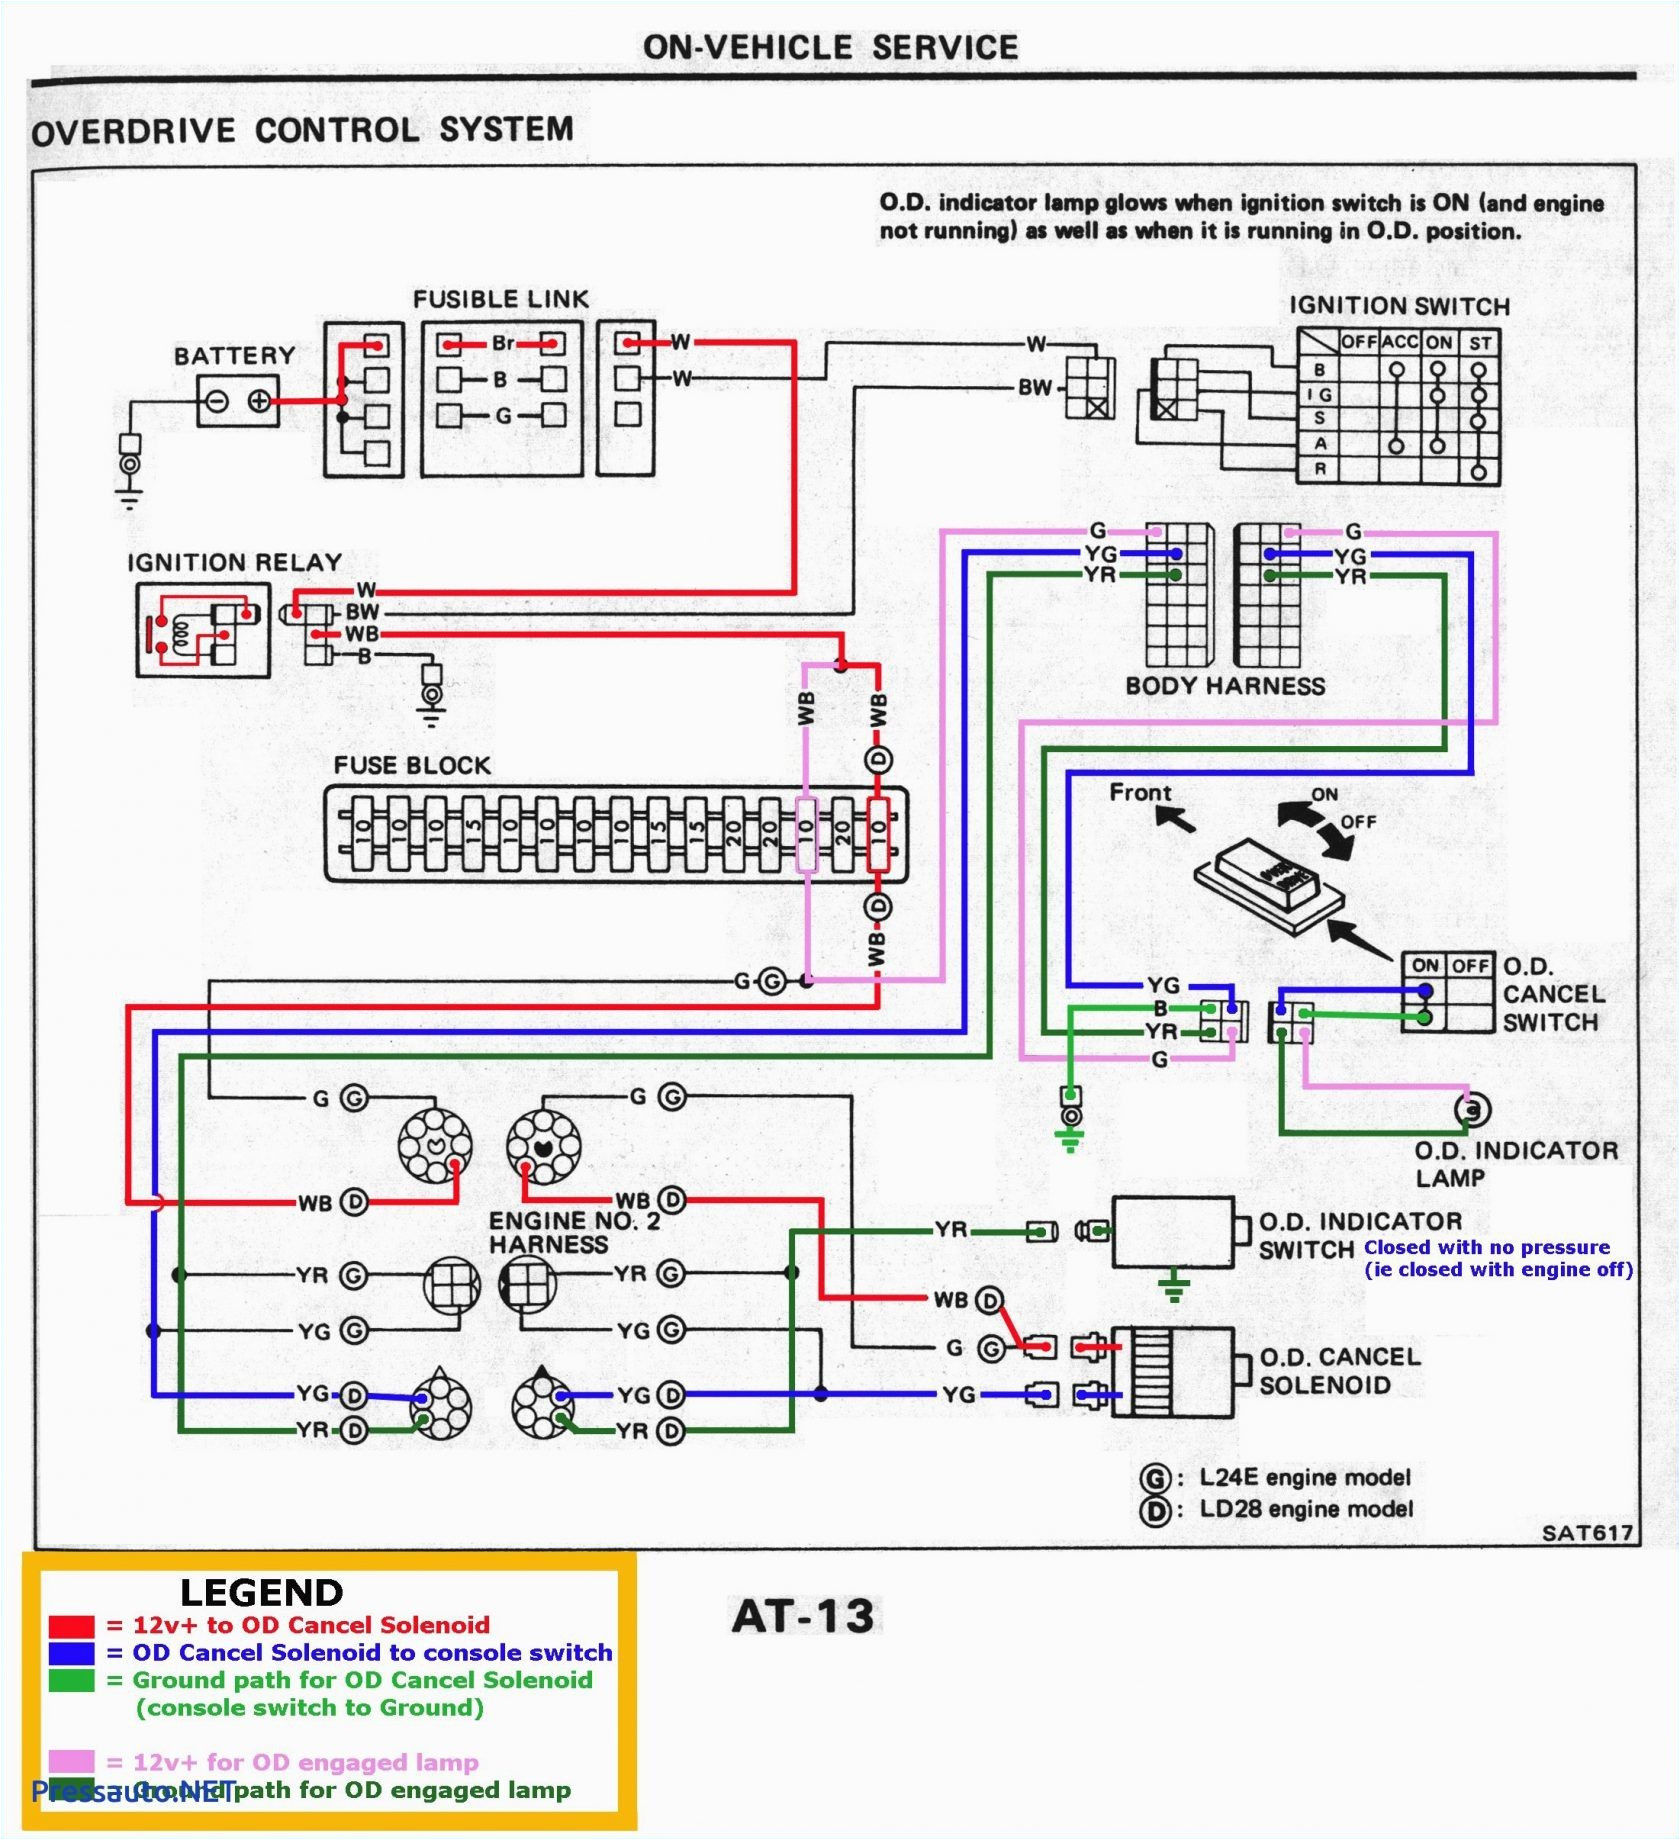 sony ccd wiring diagram wiring diagram local sony ccd wiring diagram